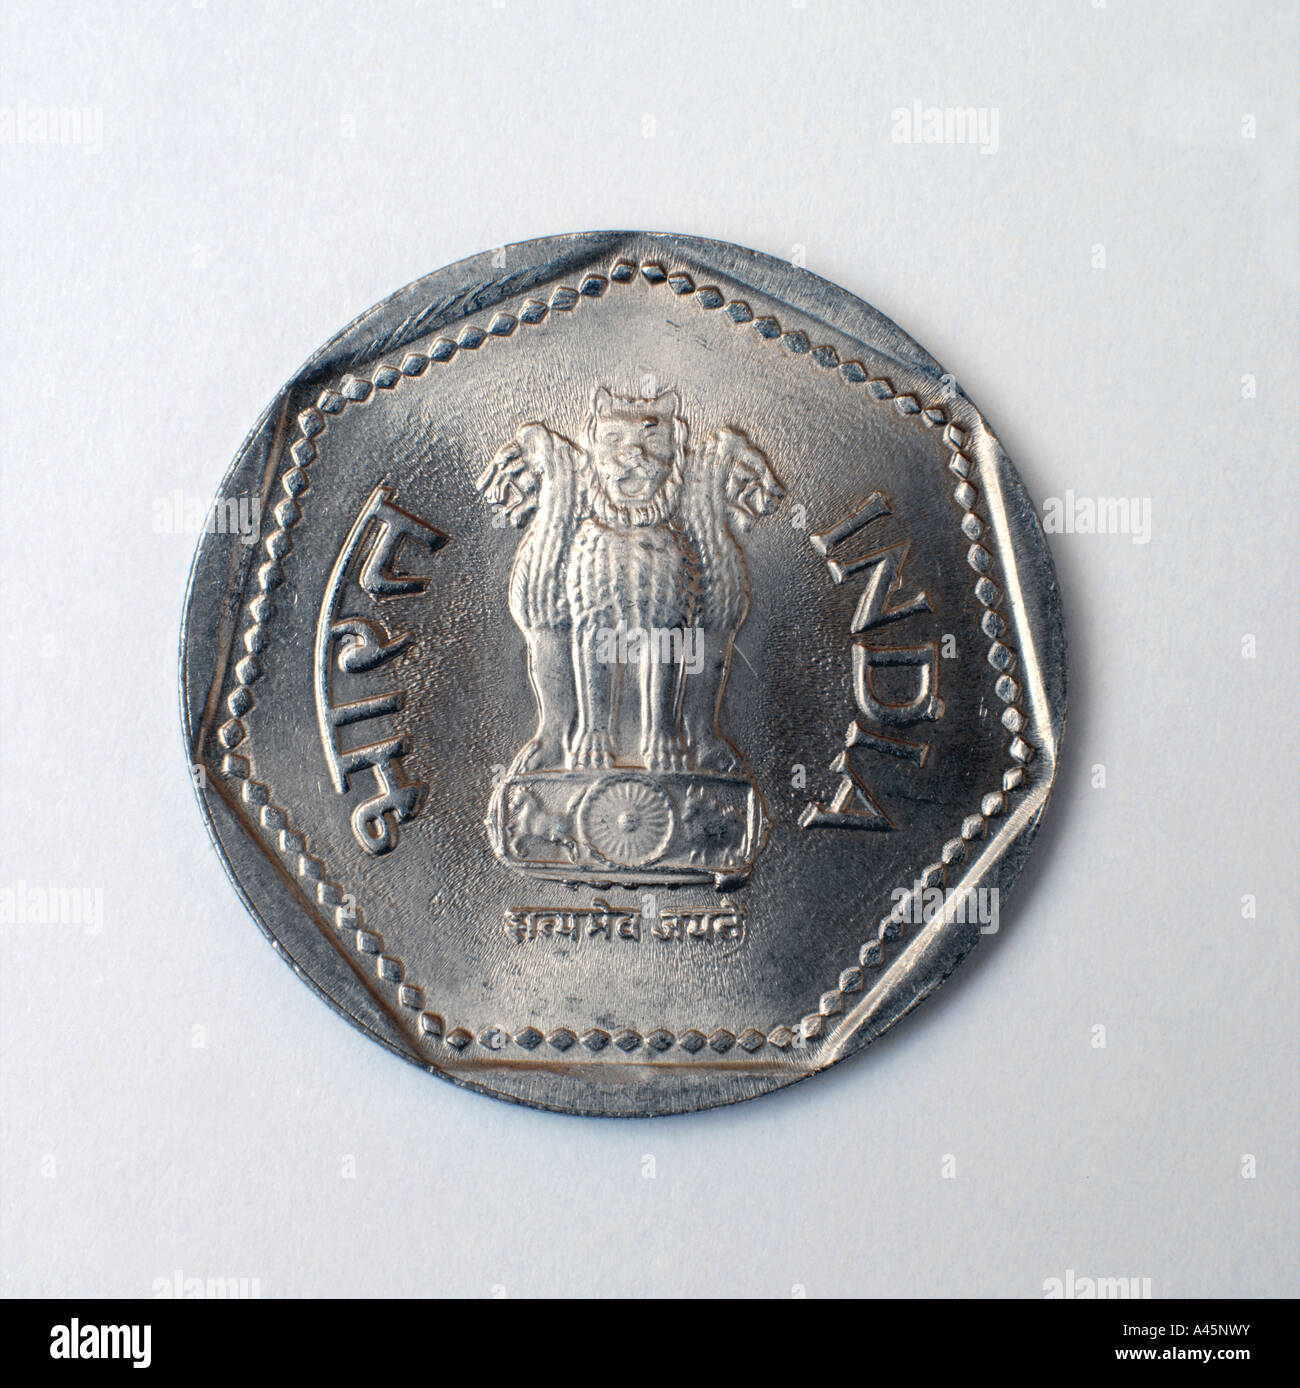 India Rupee coin showing ashoka’s column three lions symbol of india ...